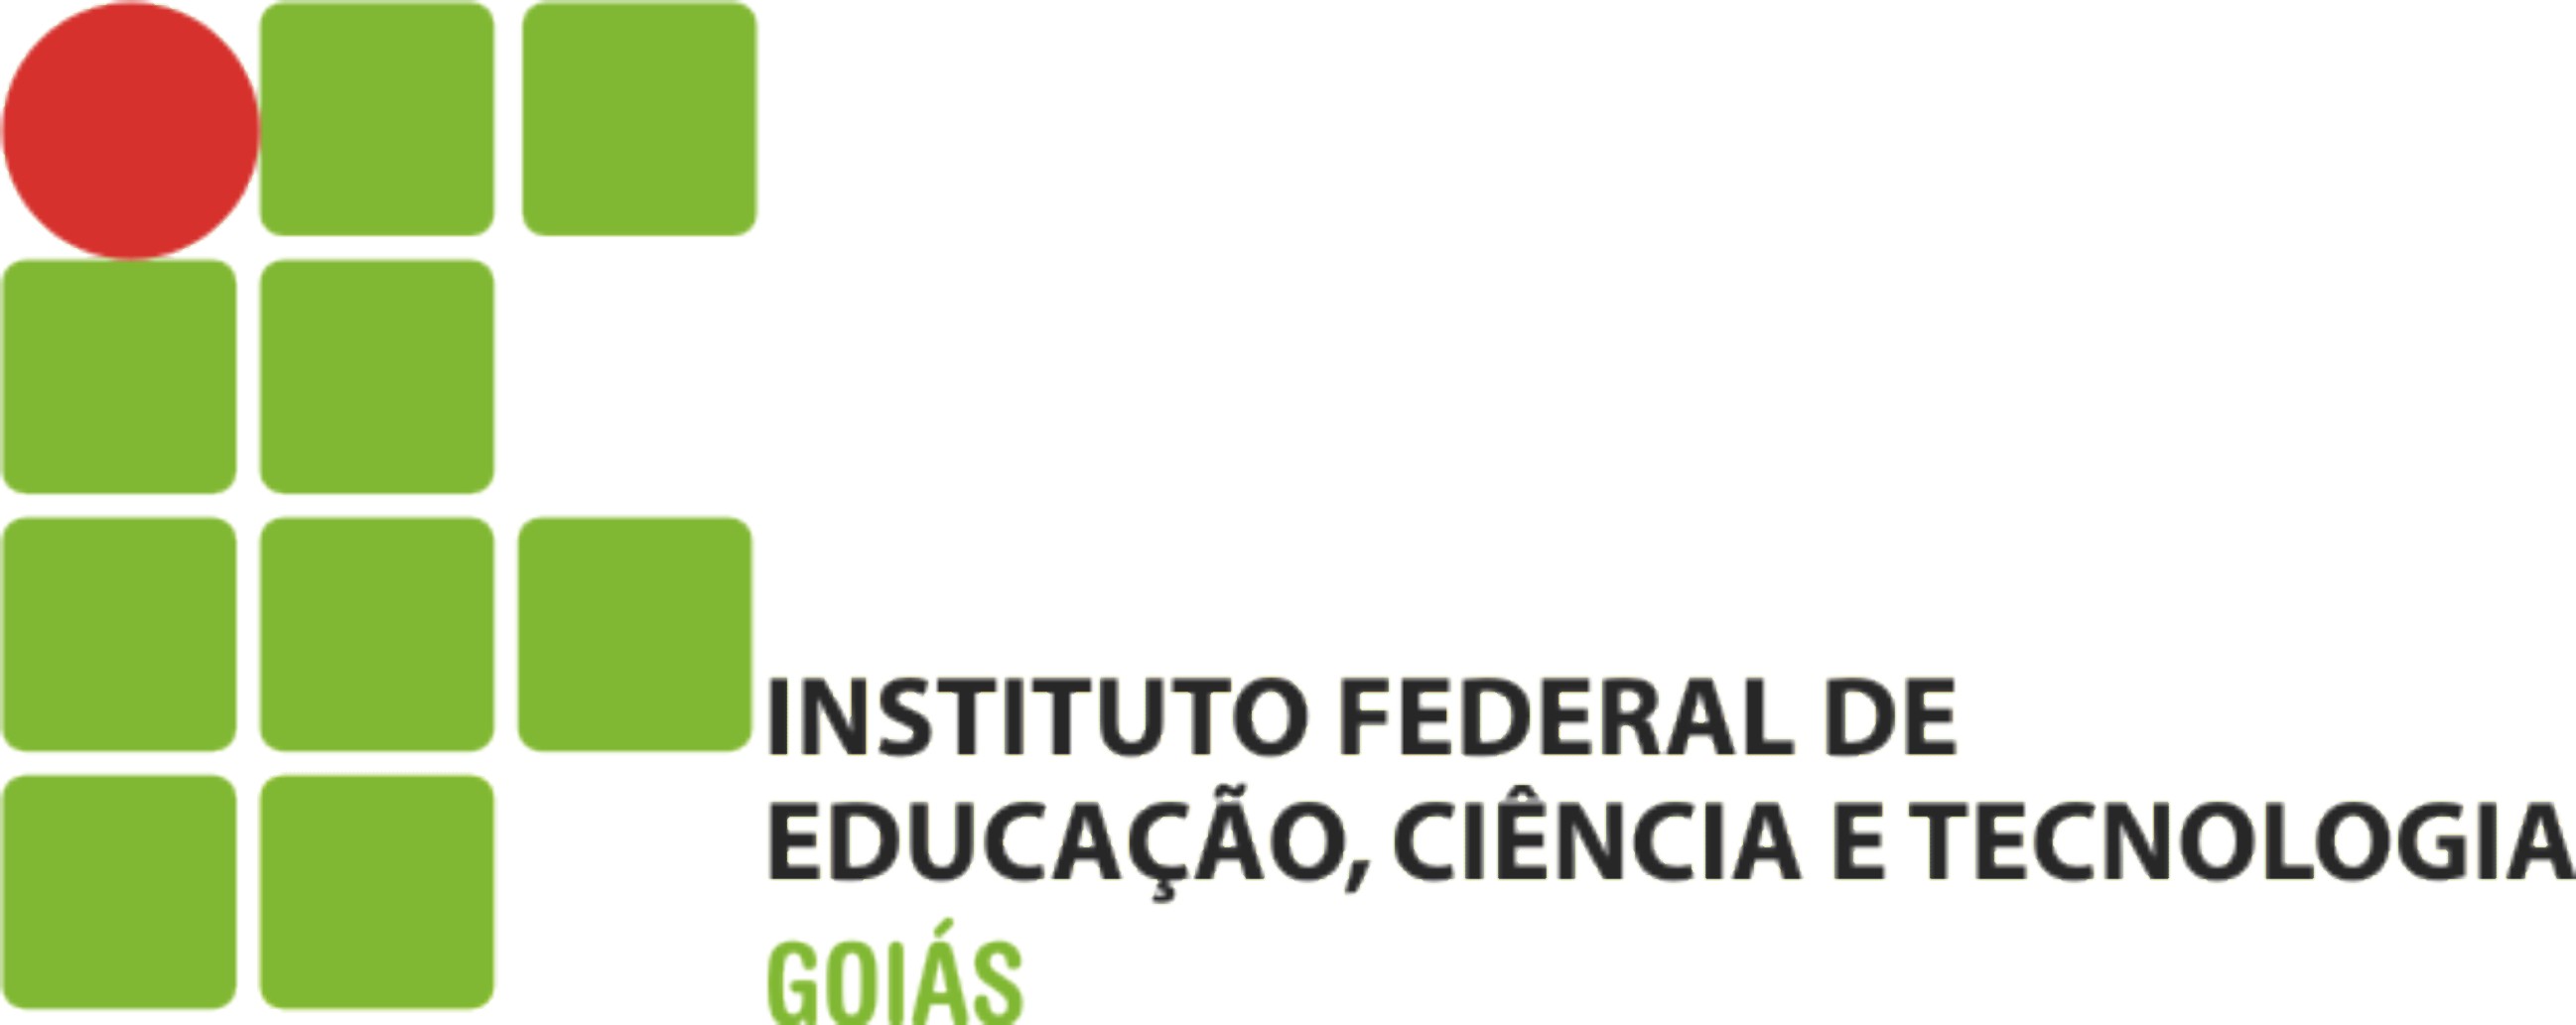 Instituto Federal de Goiás - Instituto Federal de Goiás